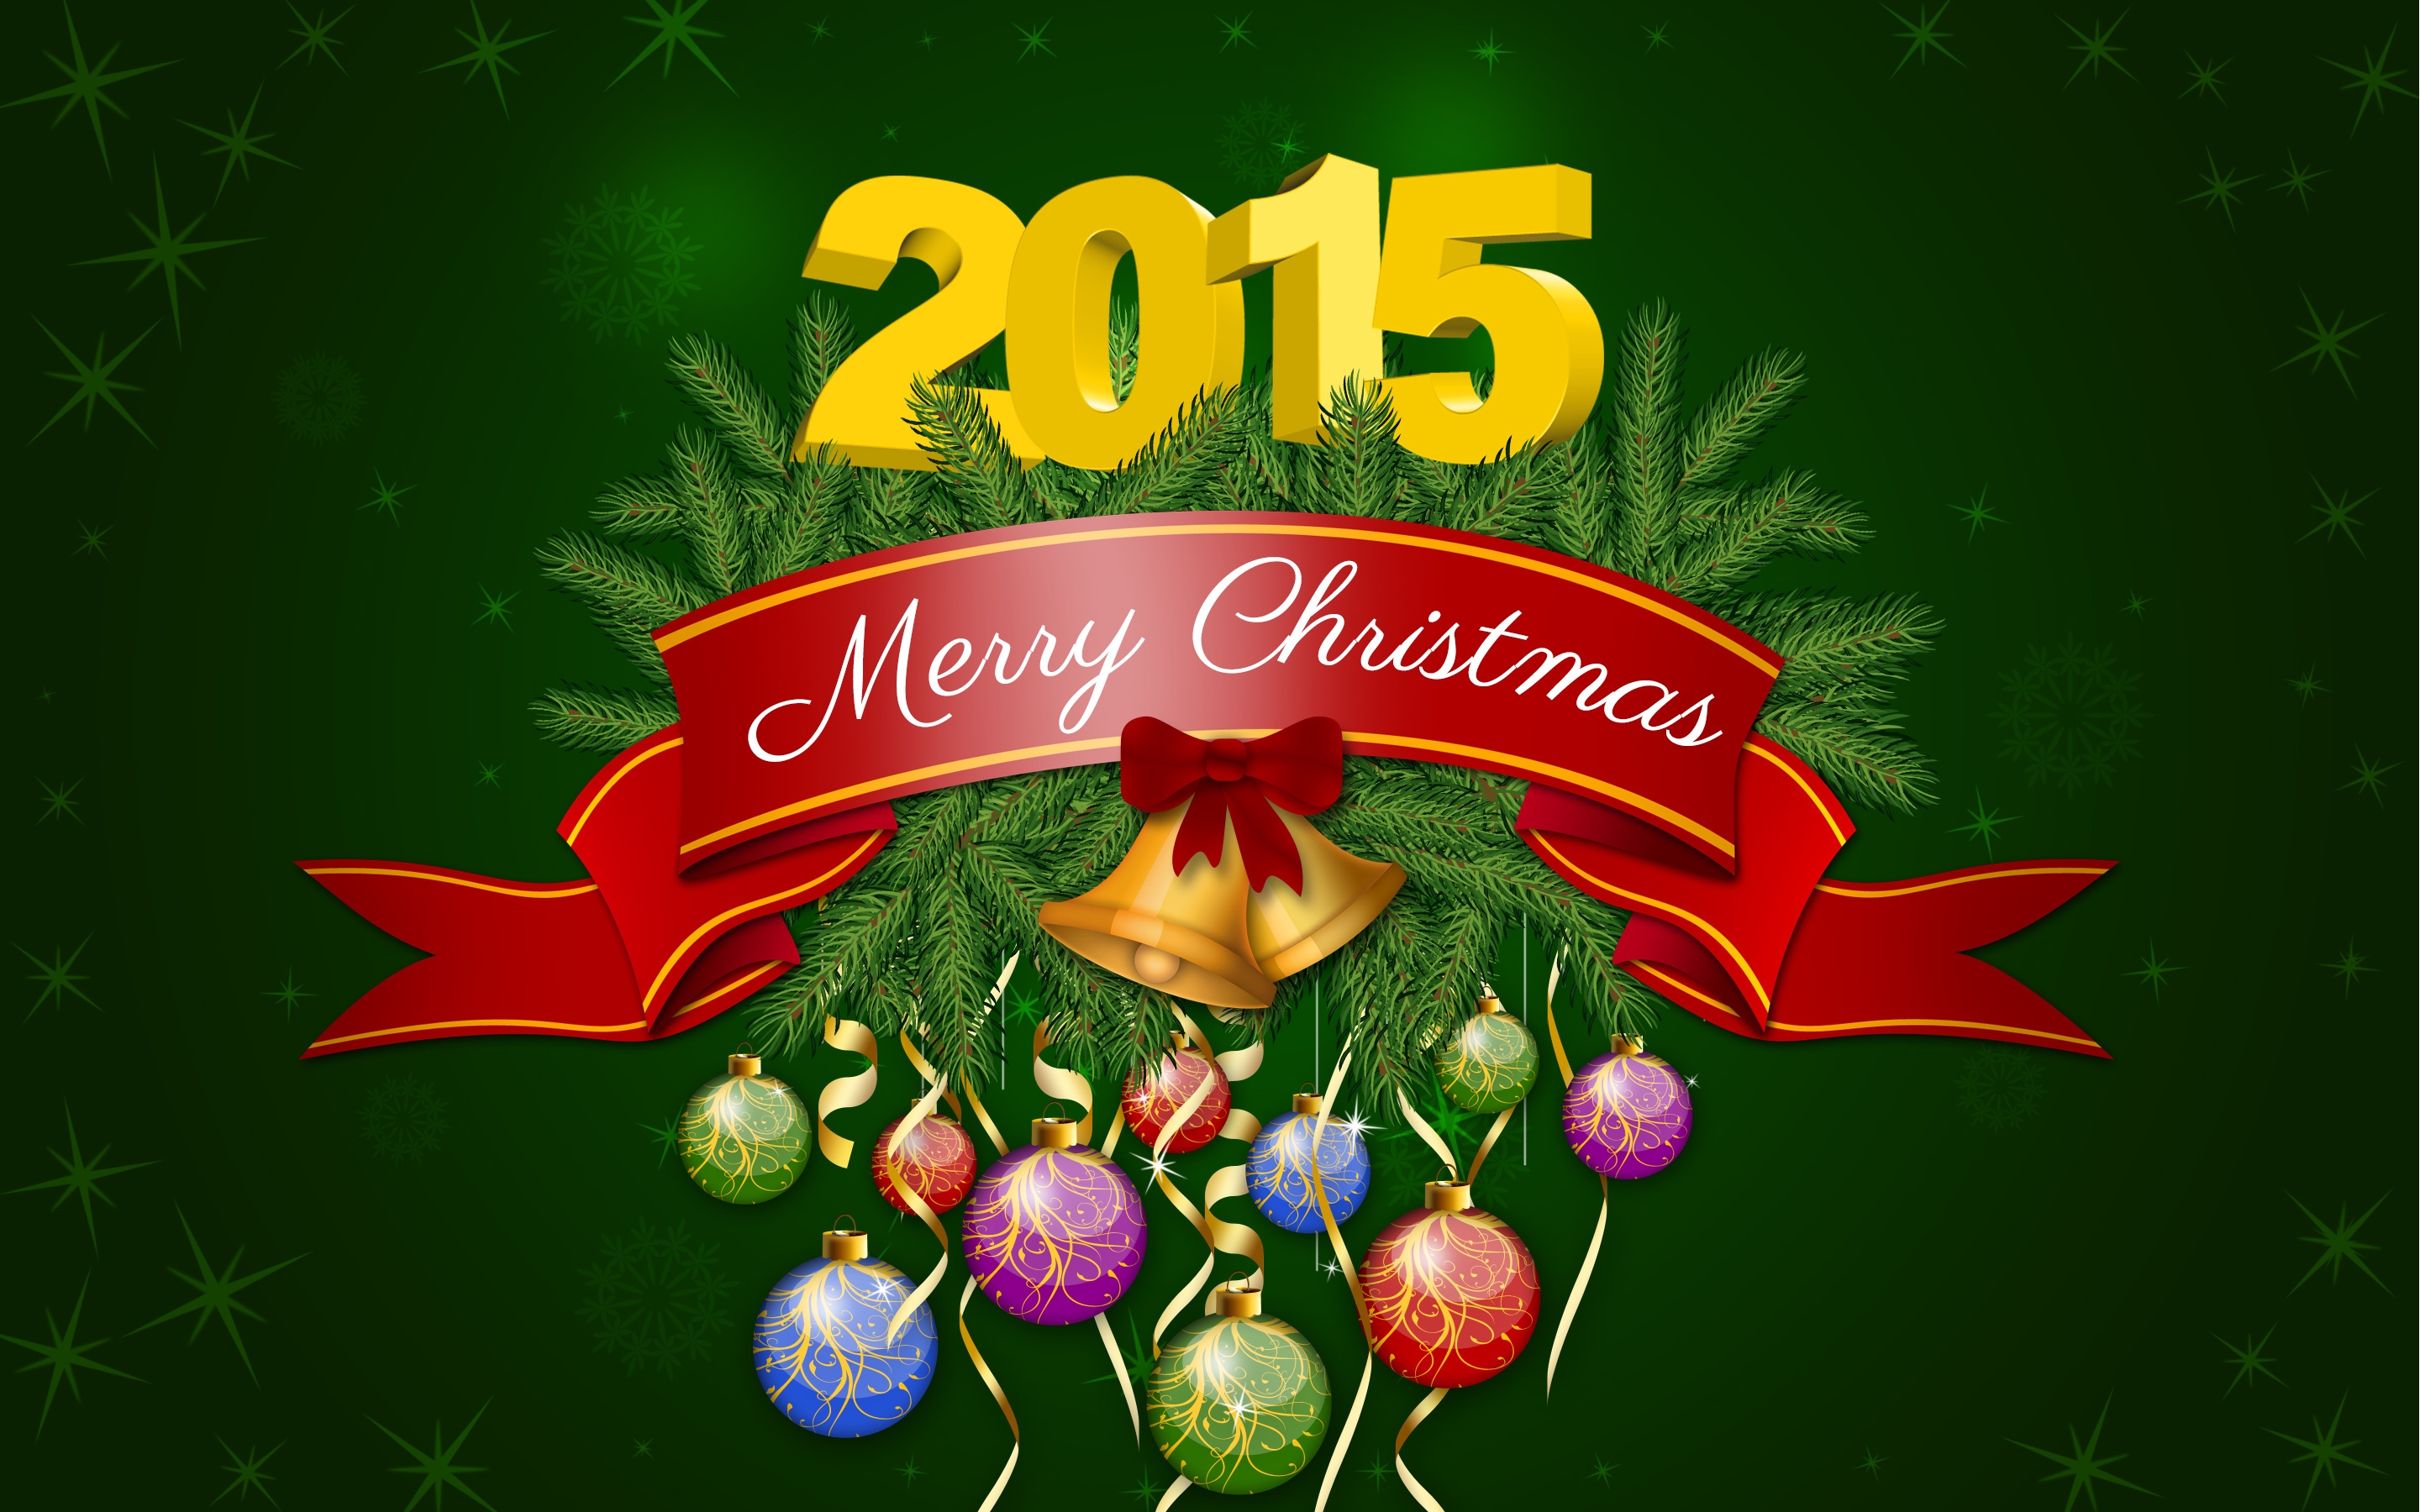 2014 Merry Christmas Poster for 2880 x 1800 Retina Display resolution